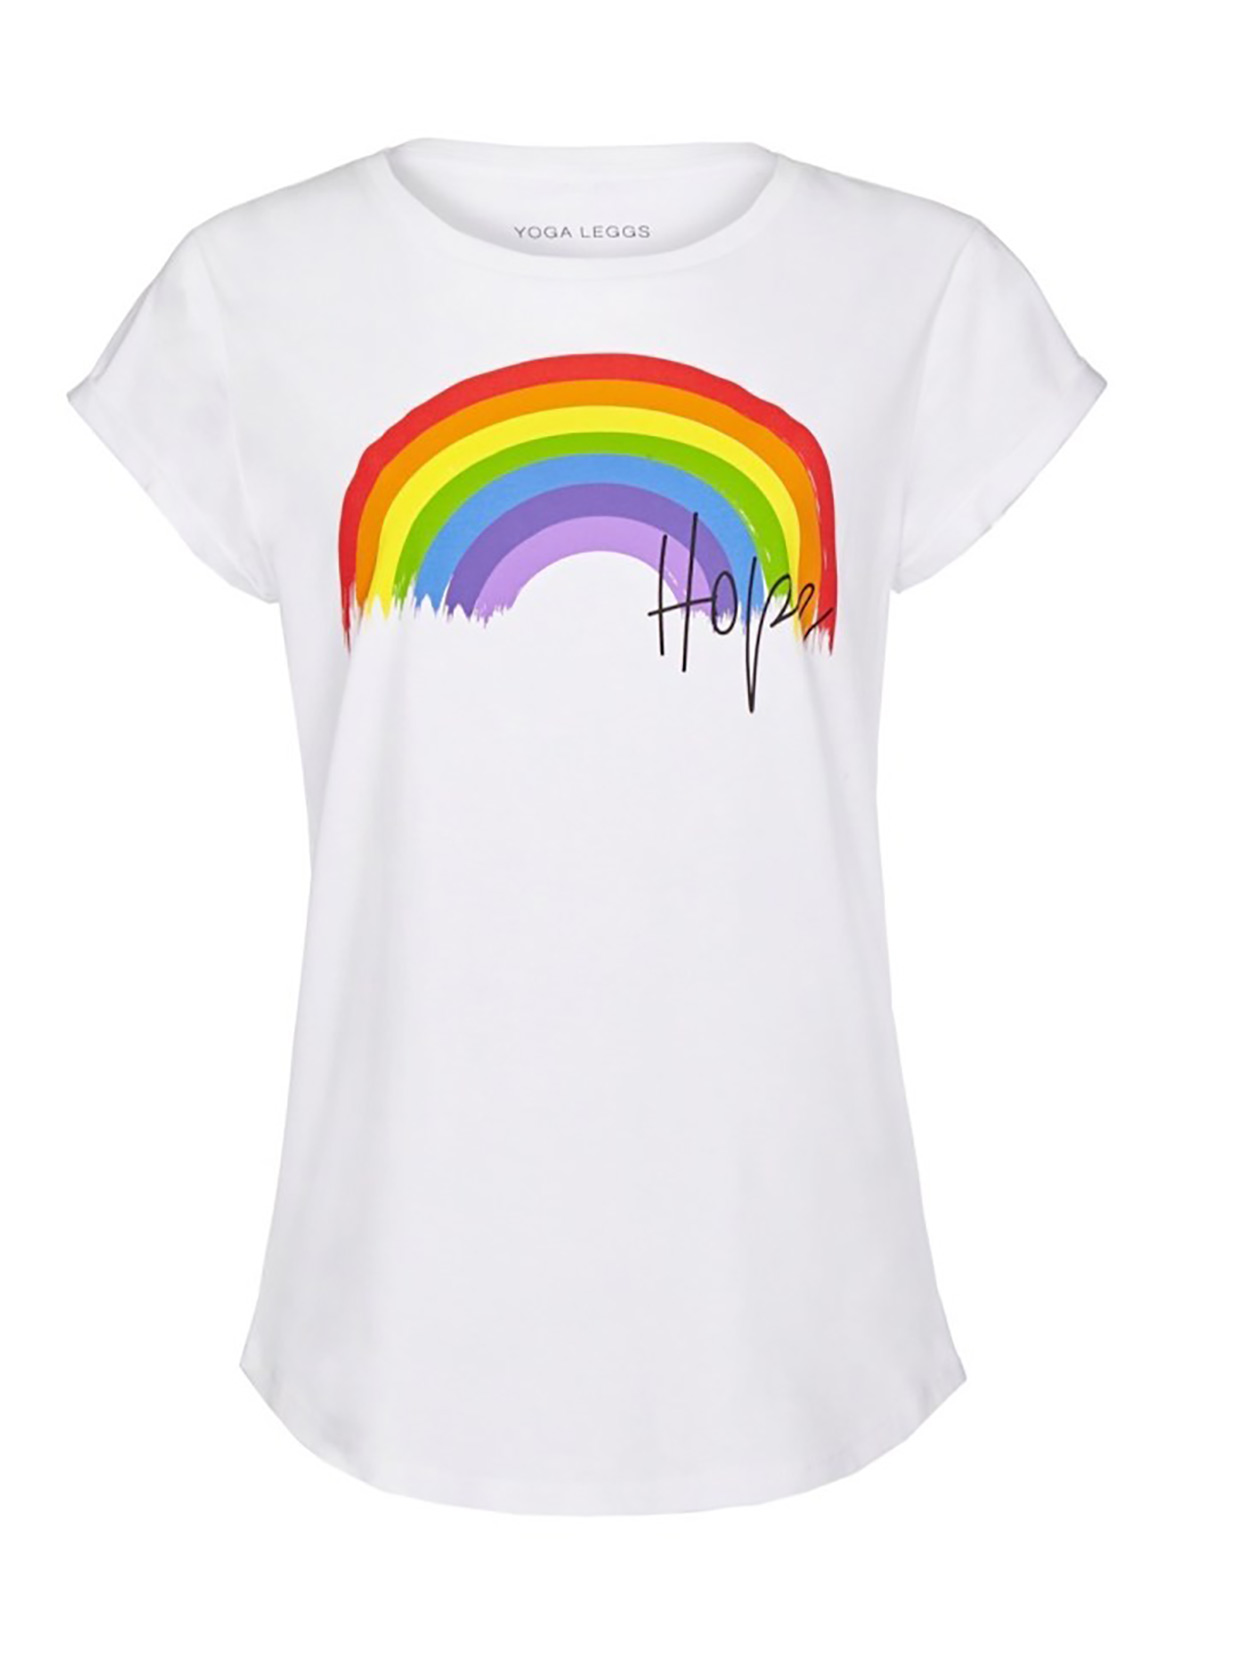 Yoga Leggs Rainbow and Hope White T-Shirt